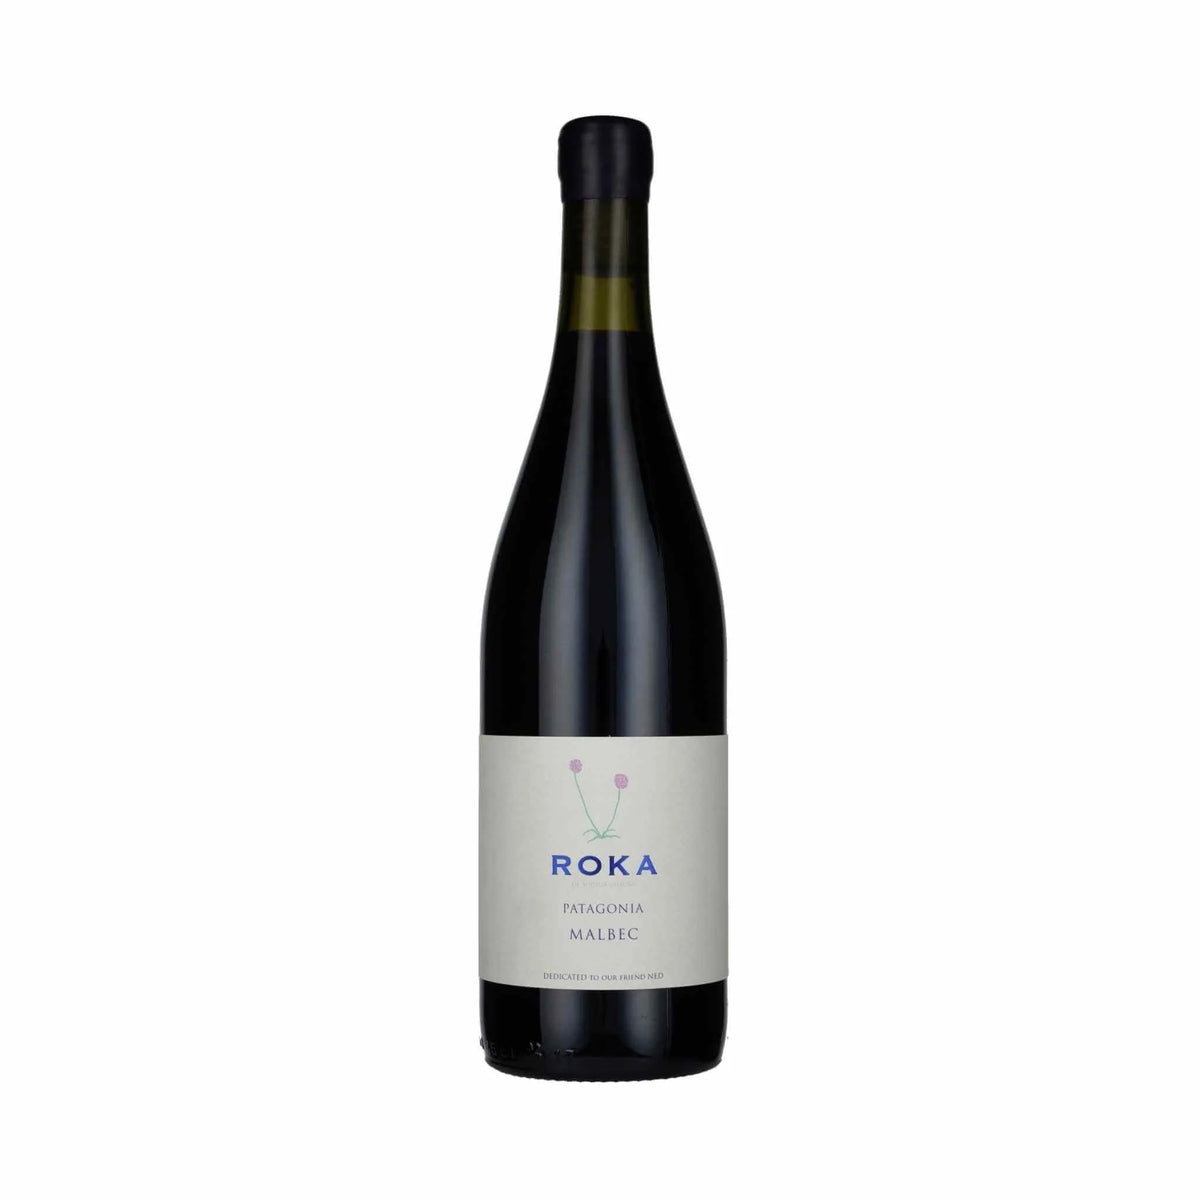 Chacra-Rotwein-Pinot Noir-2020 Malbec Roka-WINECOM